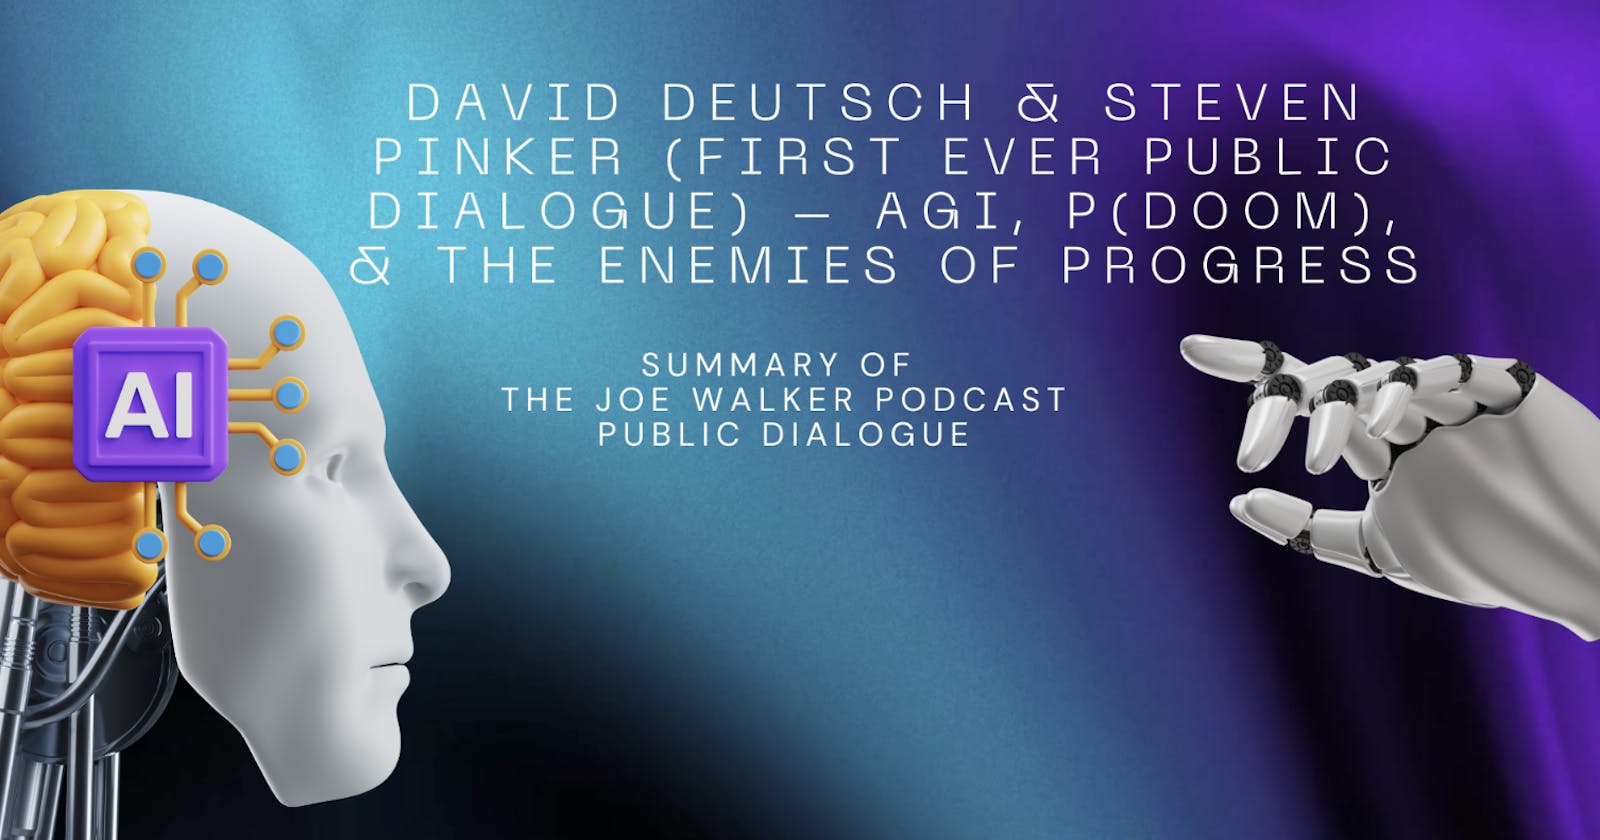 David Deutsch & Steven Pinker (First Ever Public Dialogue) – AGI, P(Doom), & The Enemies of Progress